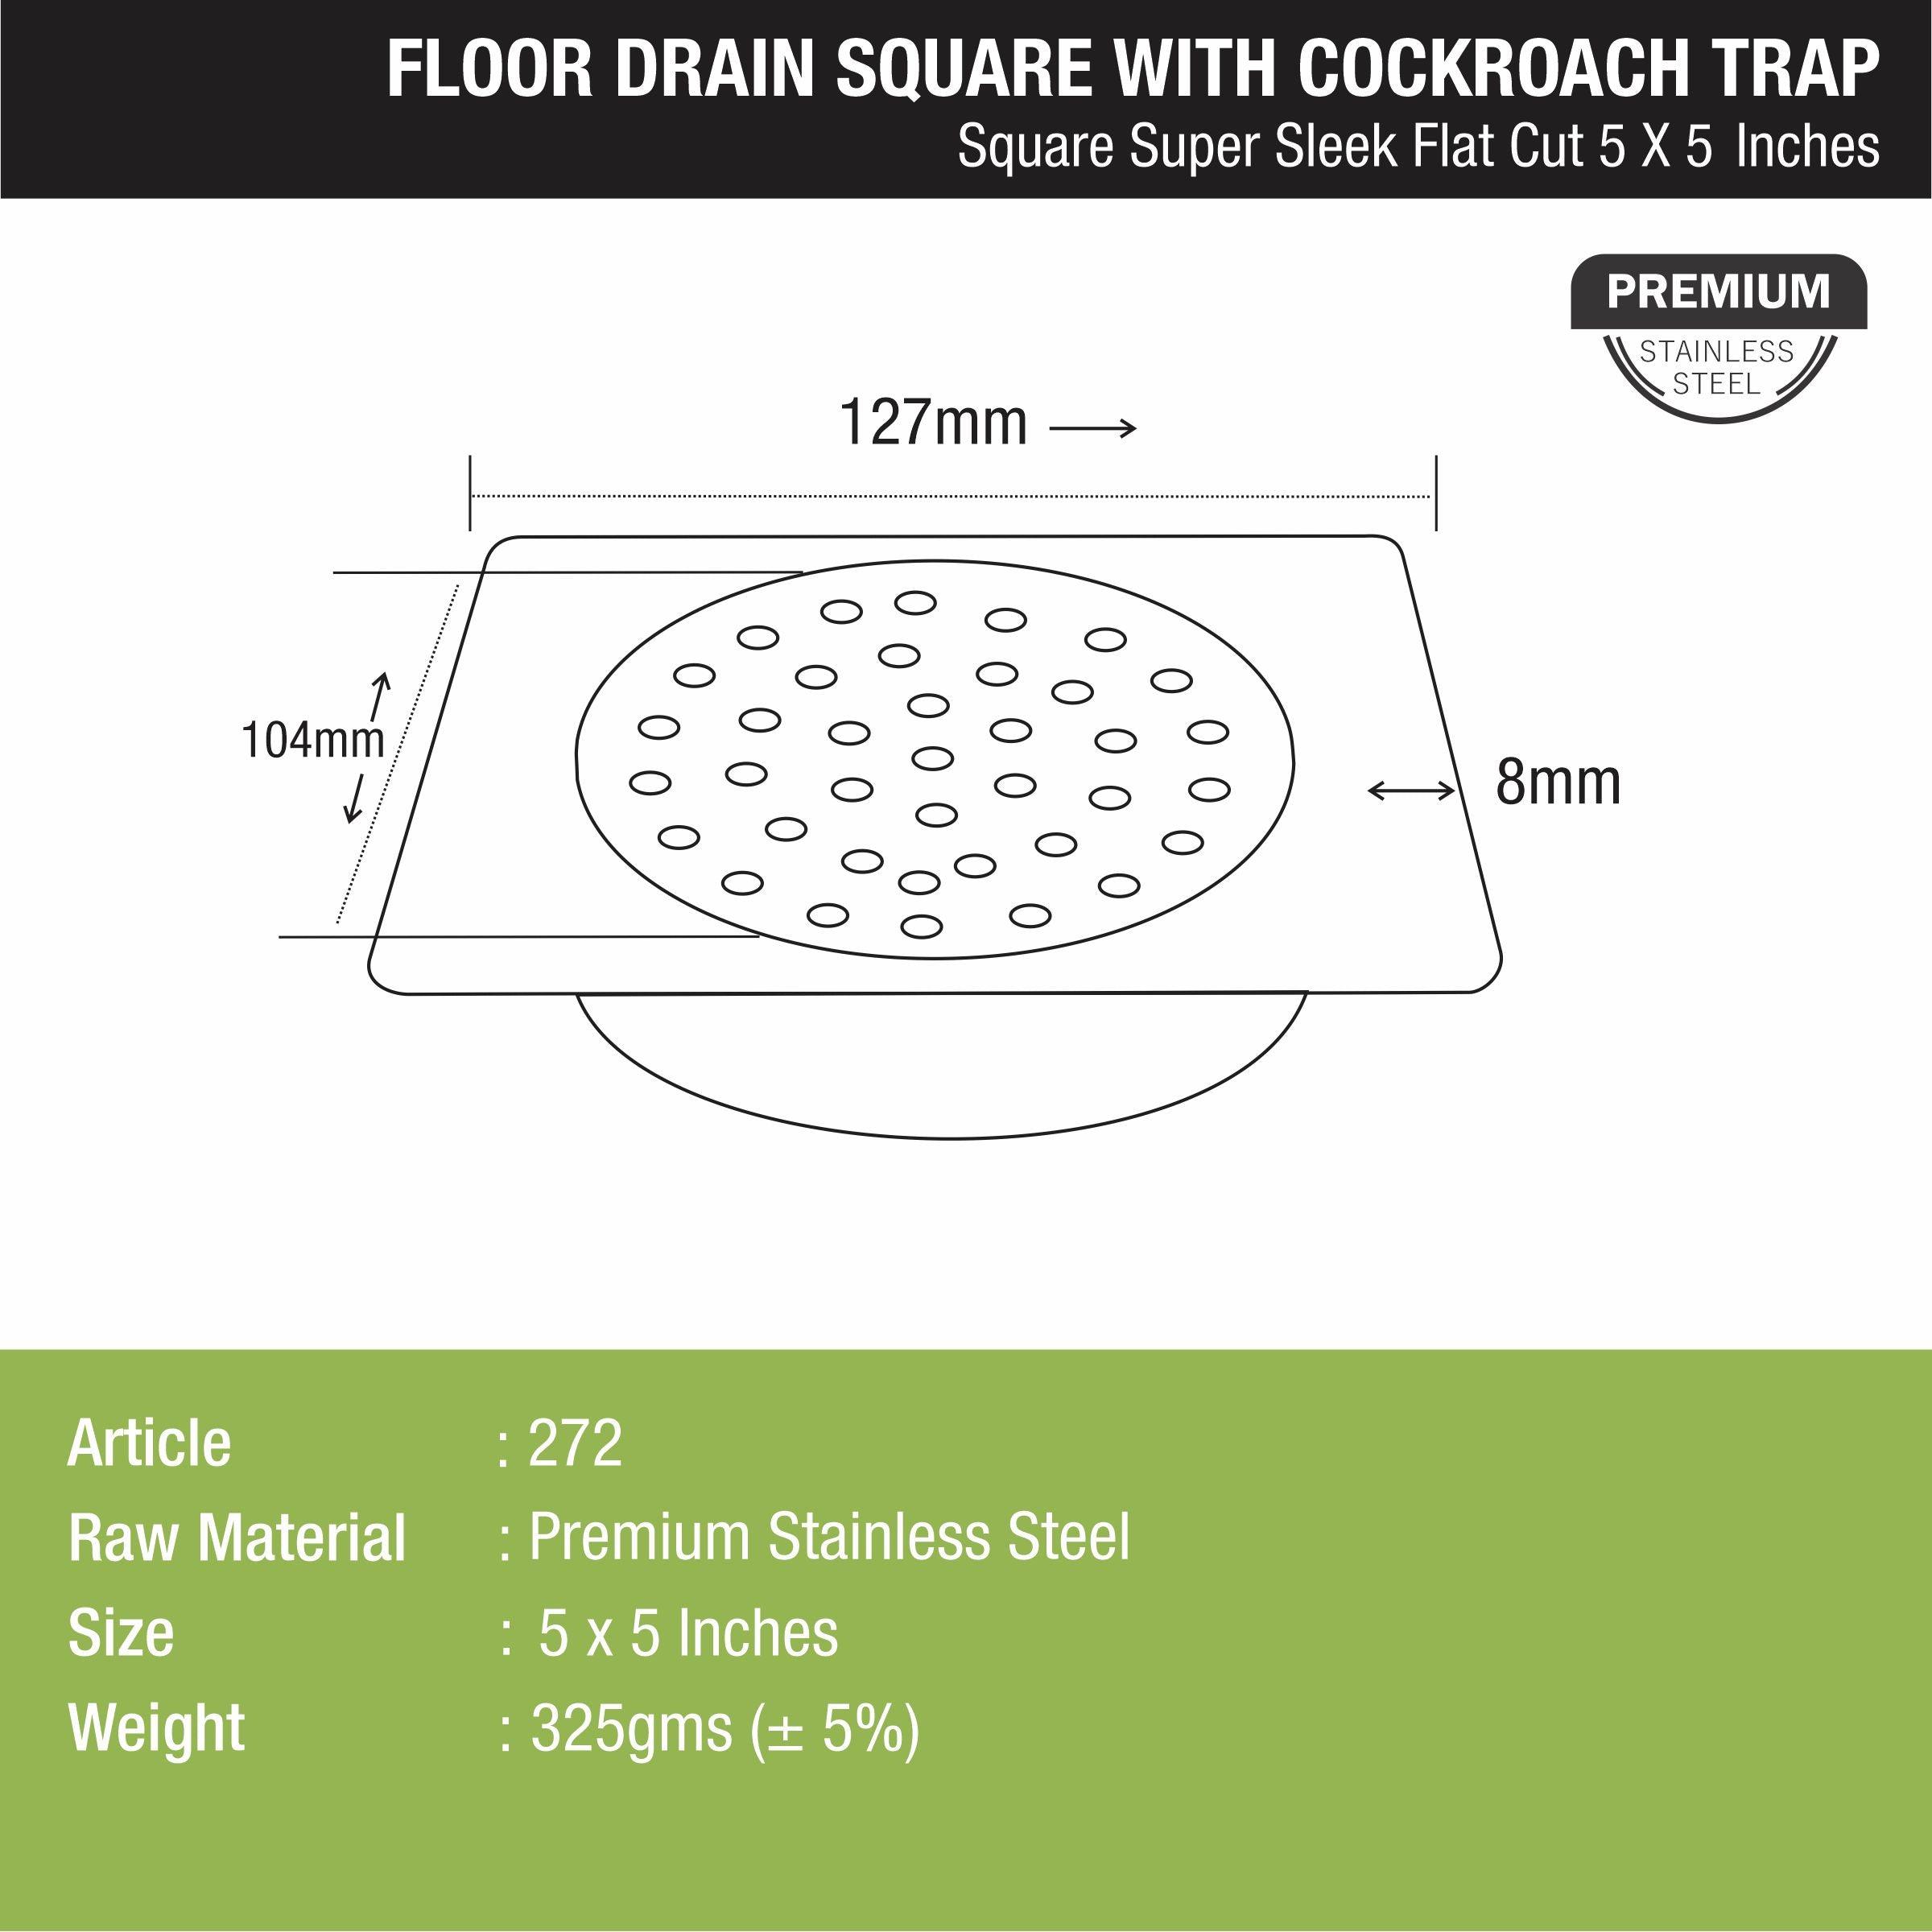 Super Sleek Square Flat Cut Floor Drain (5 x 5 Inches) with Cockroach Trap - LIPKA - Lipka Home